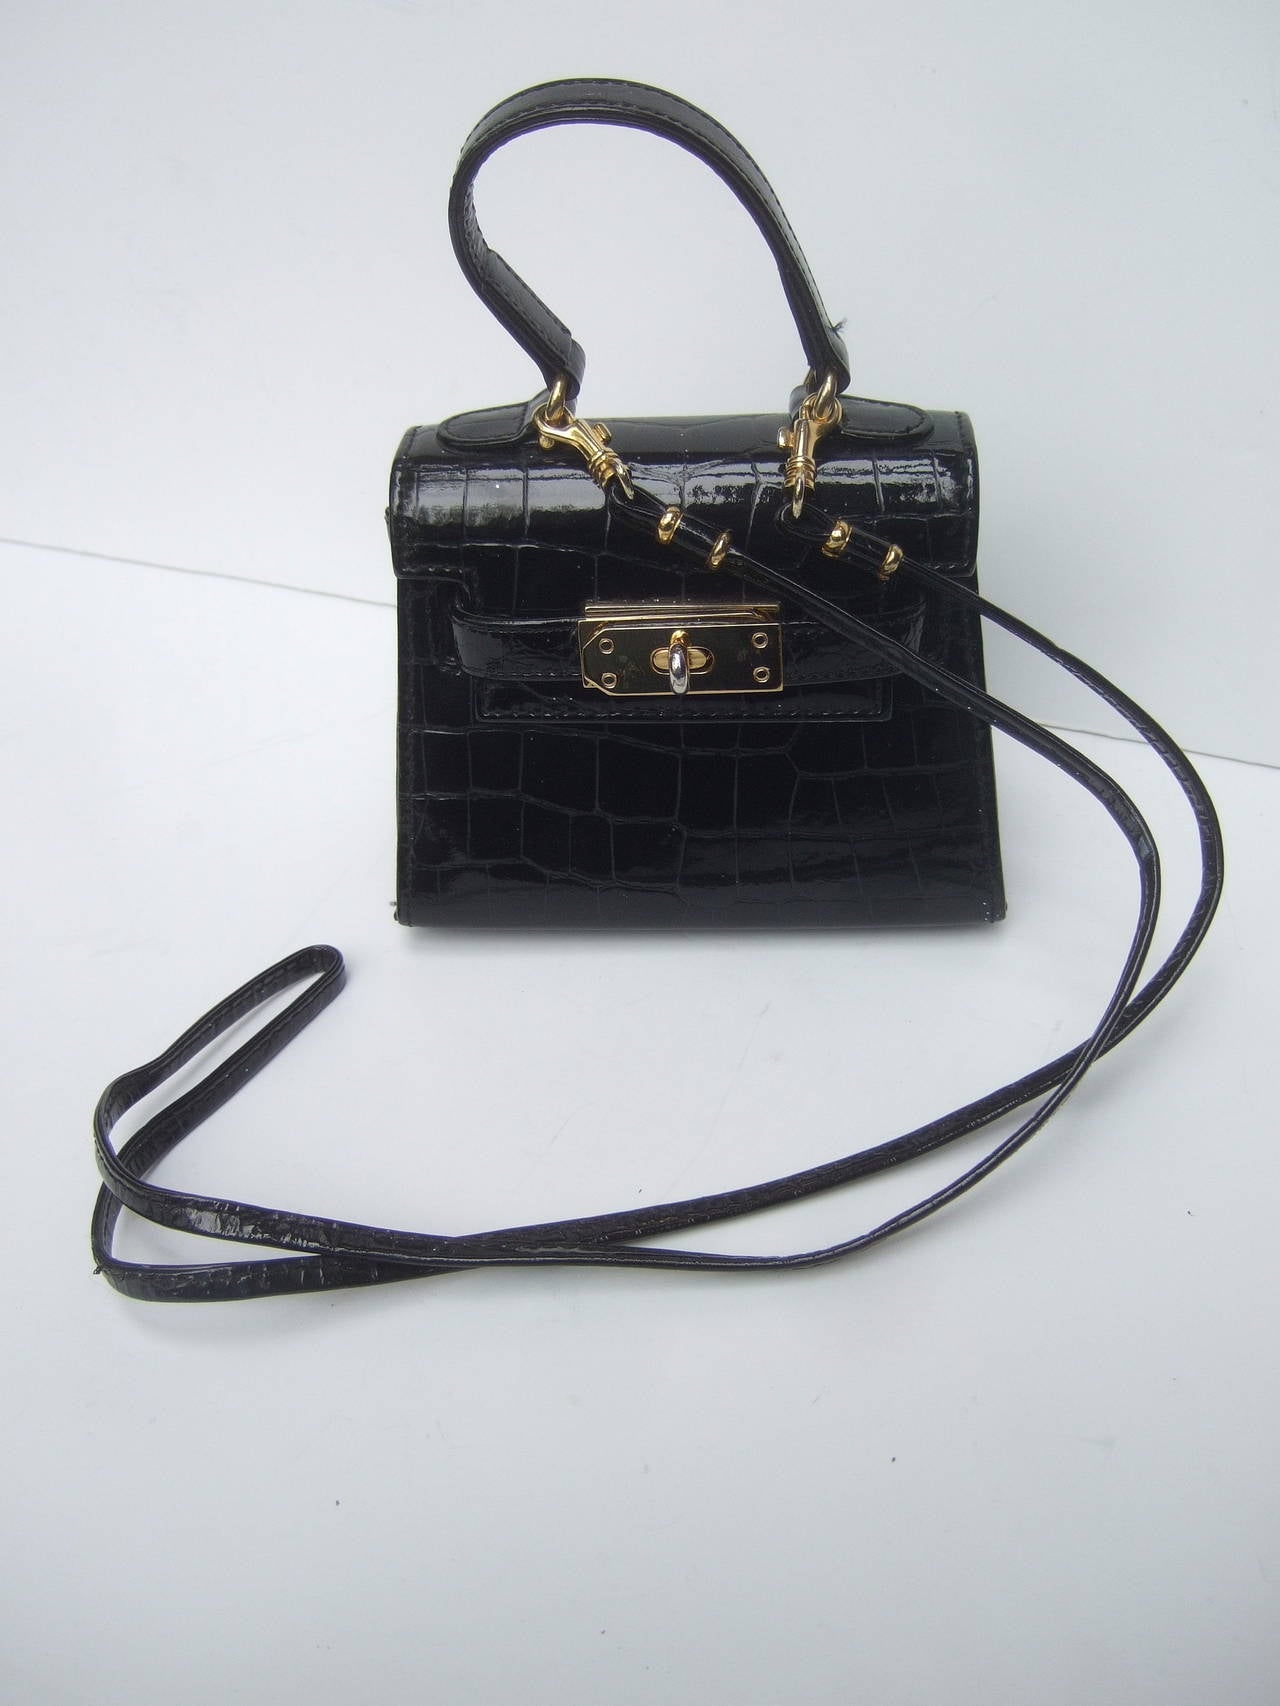 Diminutive Black Embossed Patent Leather Handbag Made in Italy 1